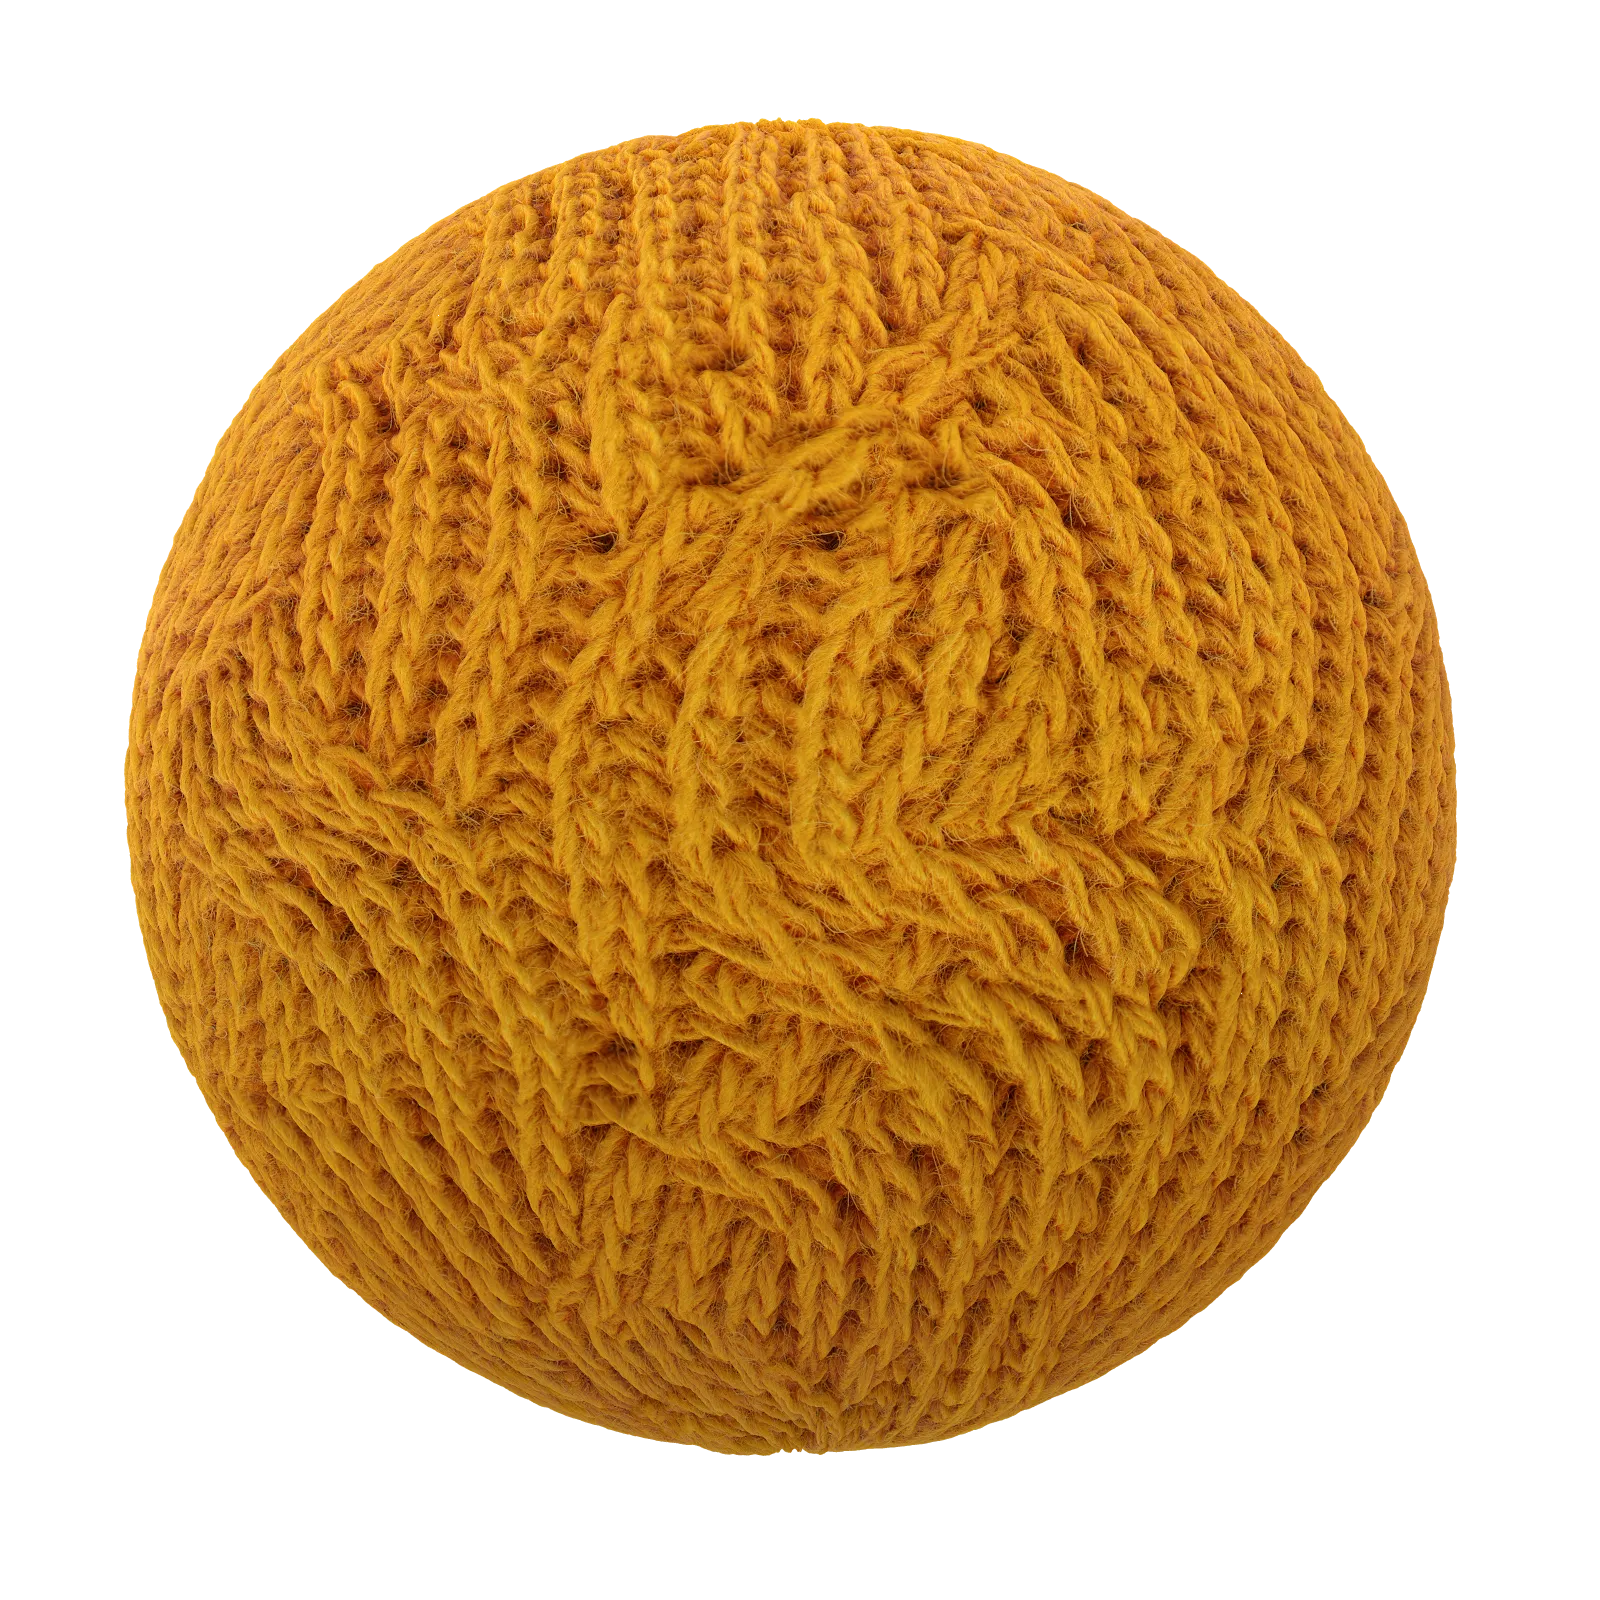 PBR CGAXIS TEXTURES – FABRICS – Orange Wool Fabric 01